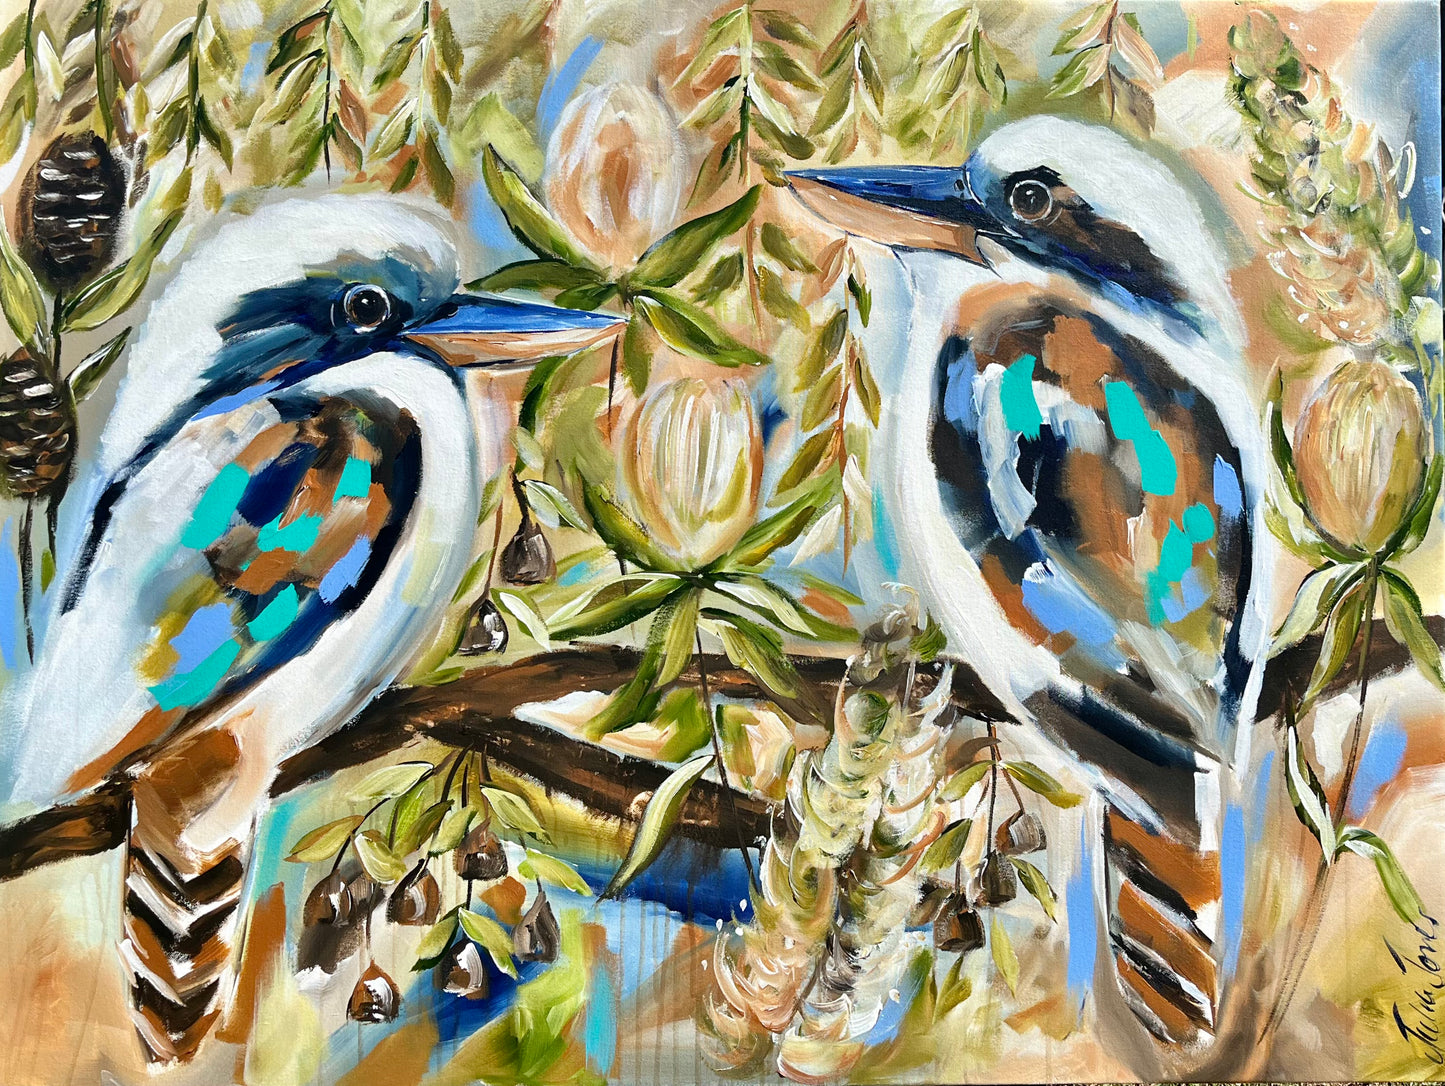 Birds - When the Kookaburra sings